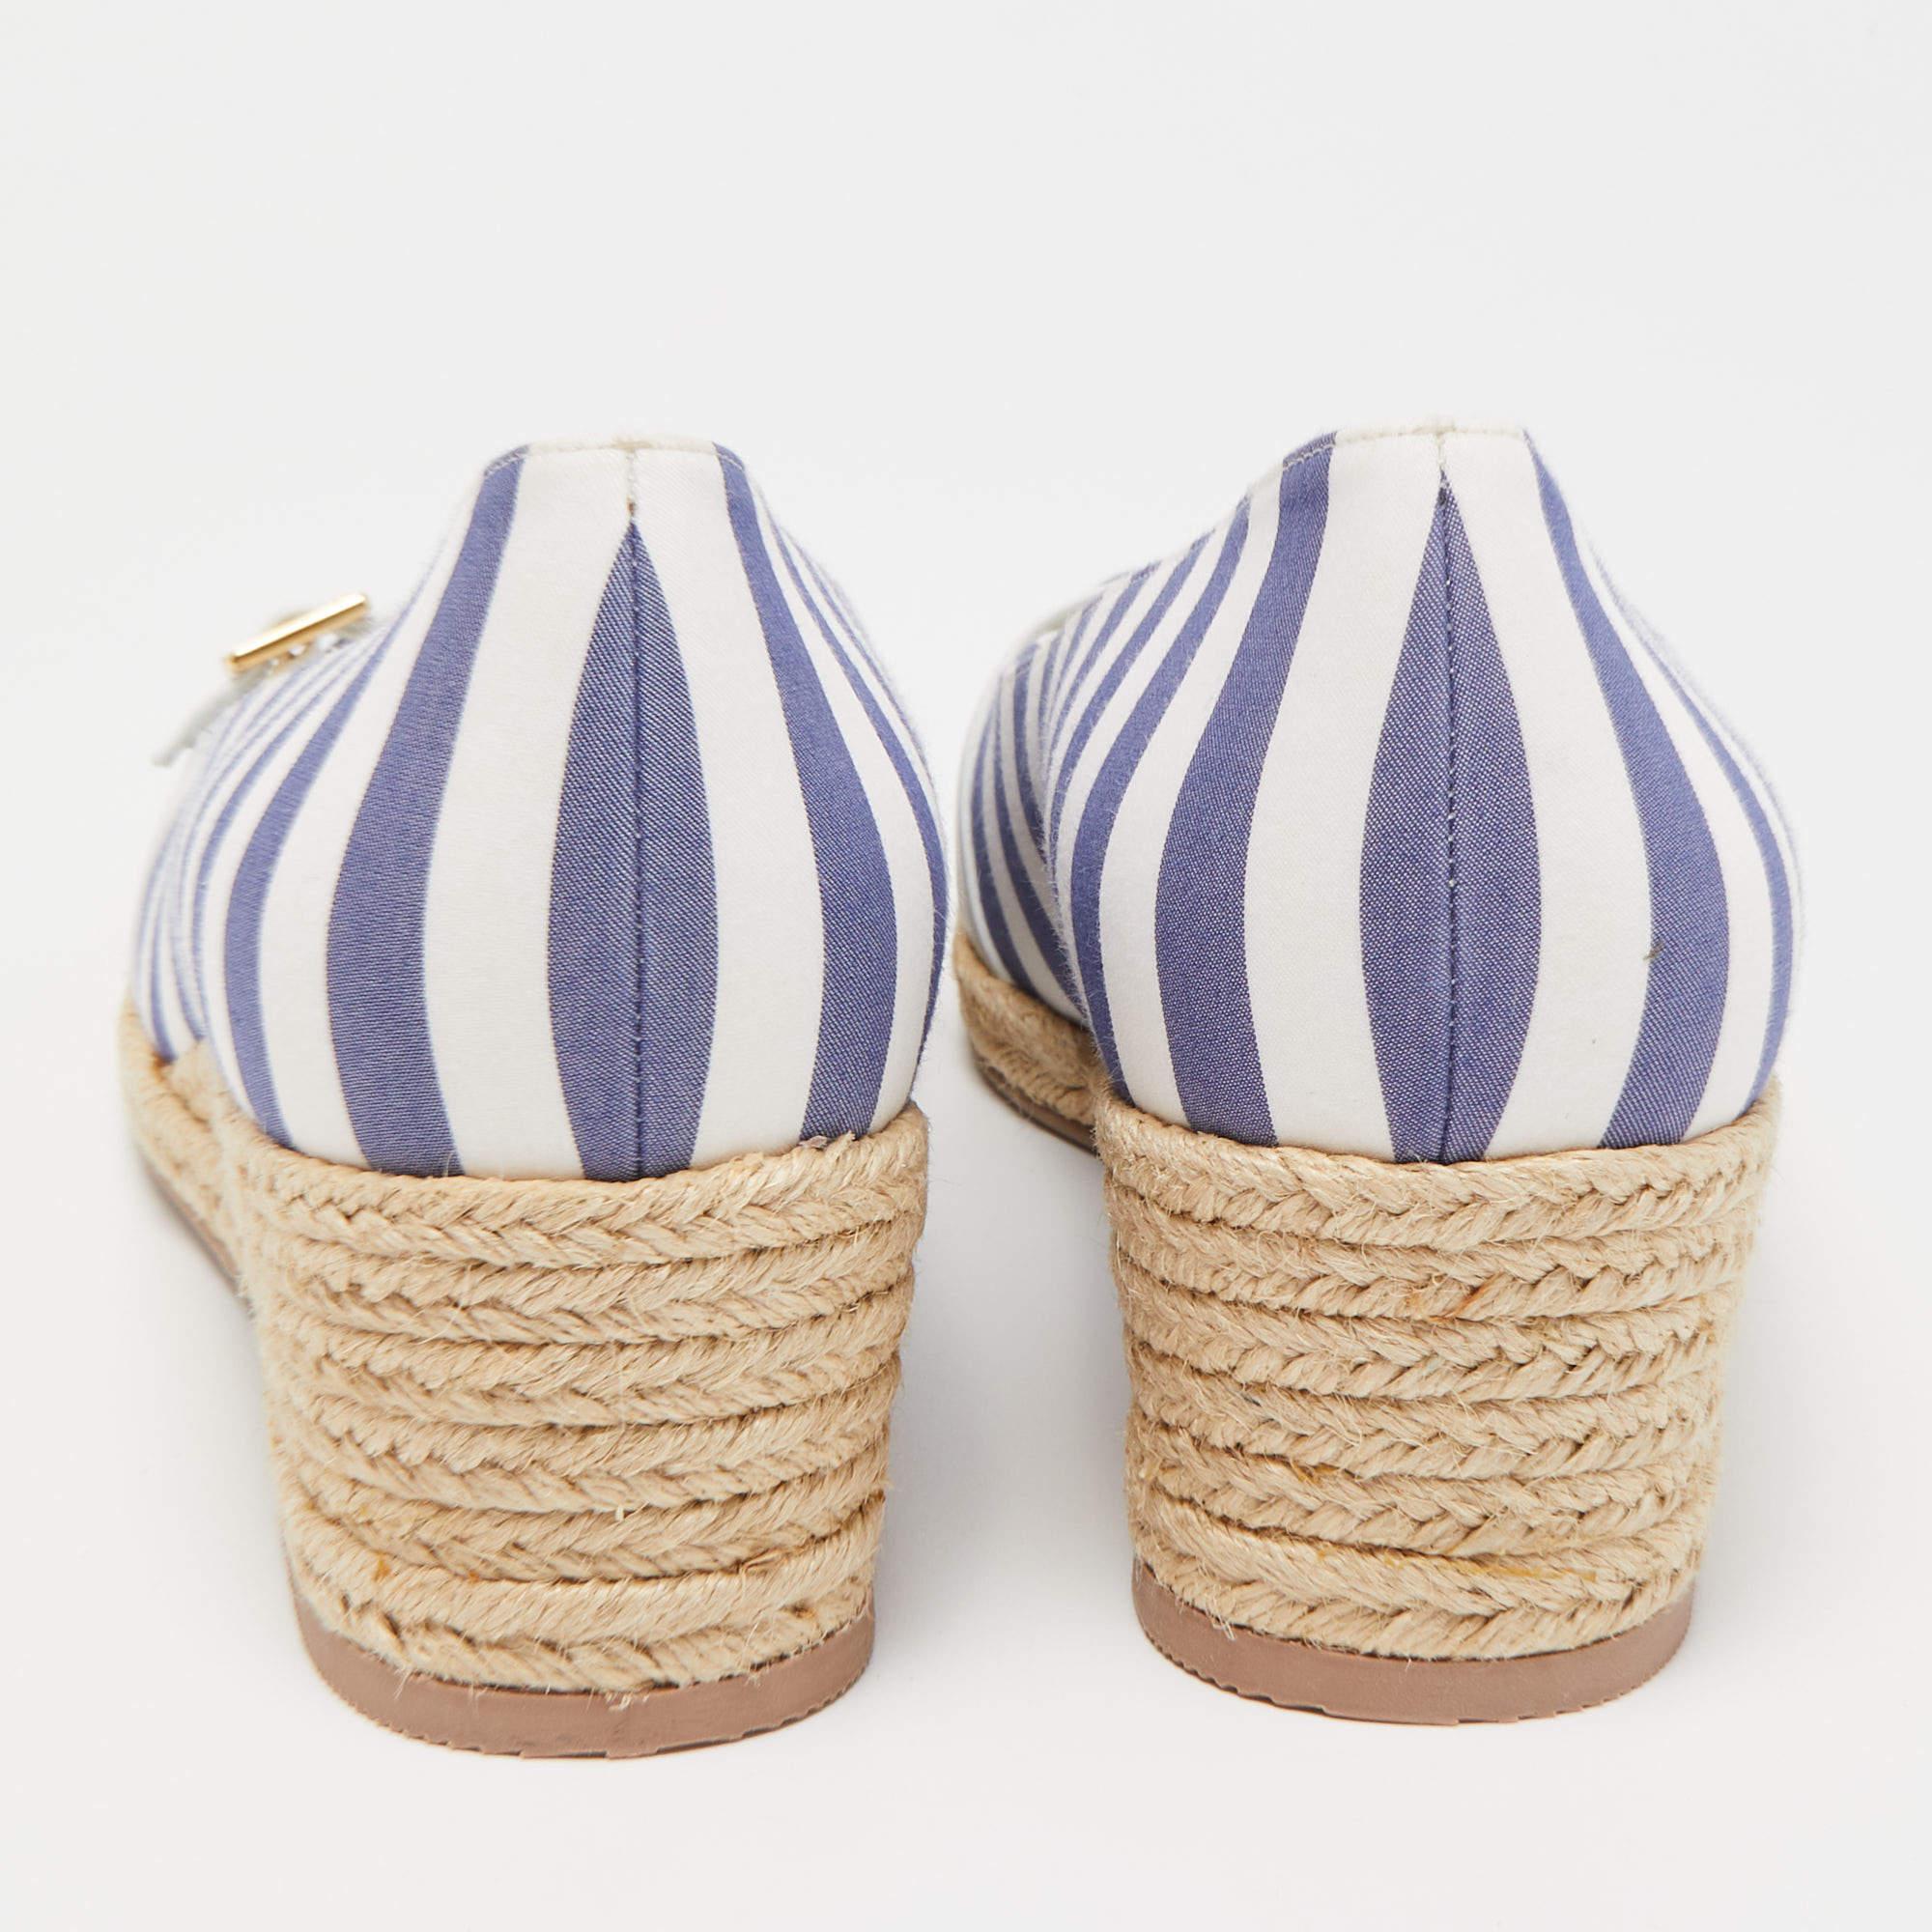 Salvatore Ferragamo Blue/White Striped Fabric Audrey Espadrille Wedge Pumps Size 2